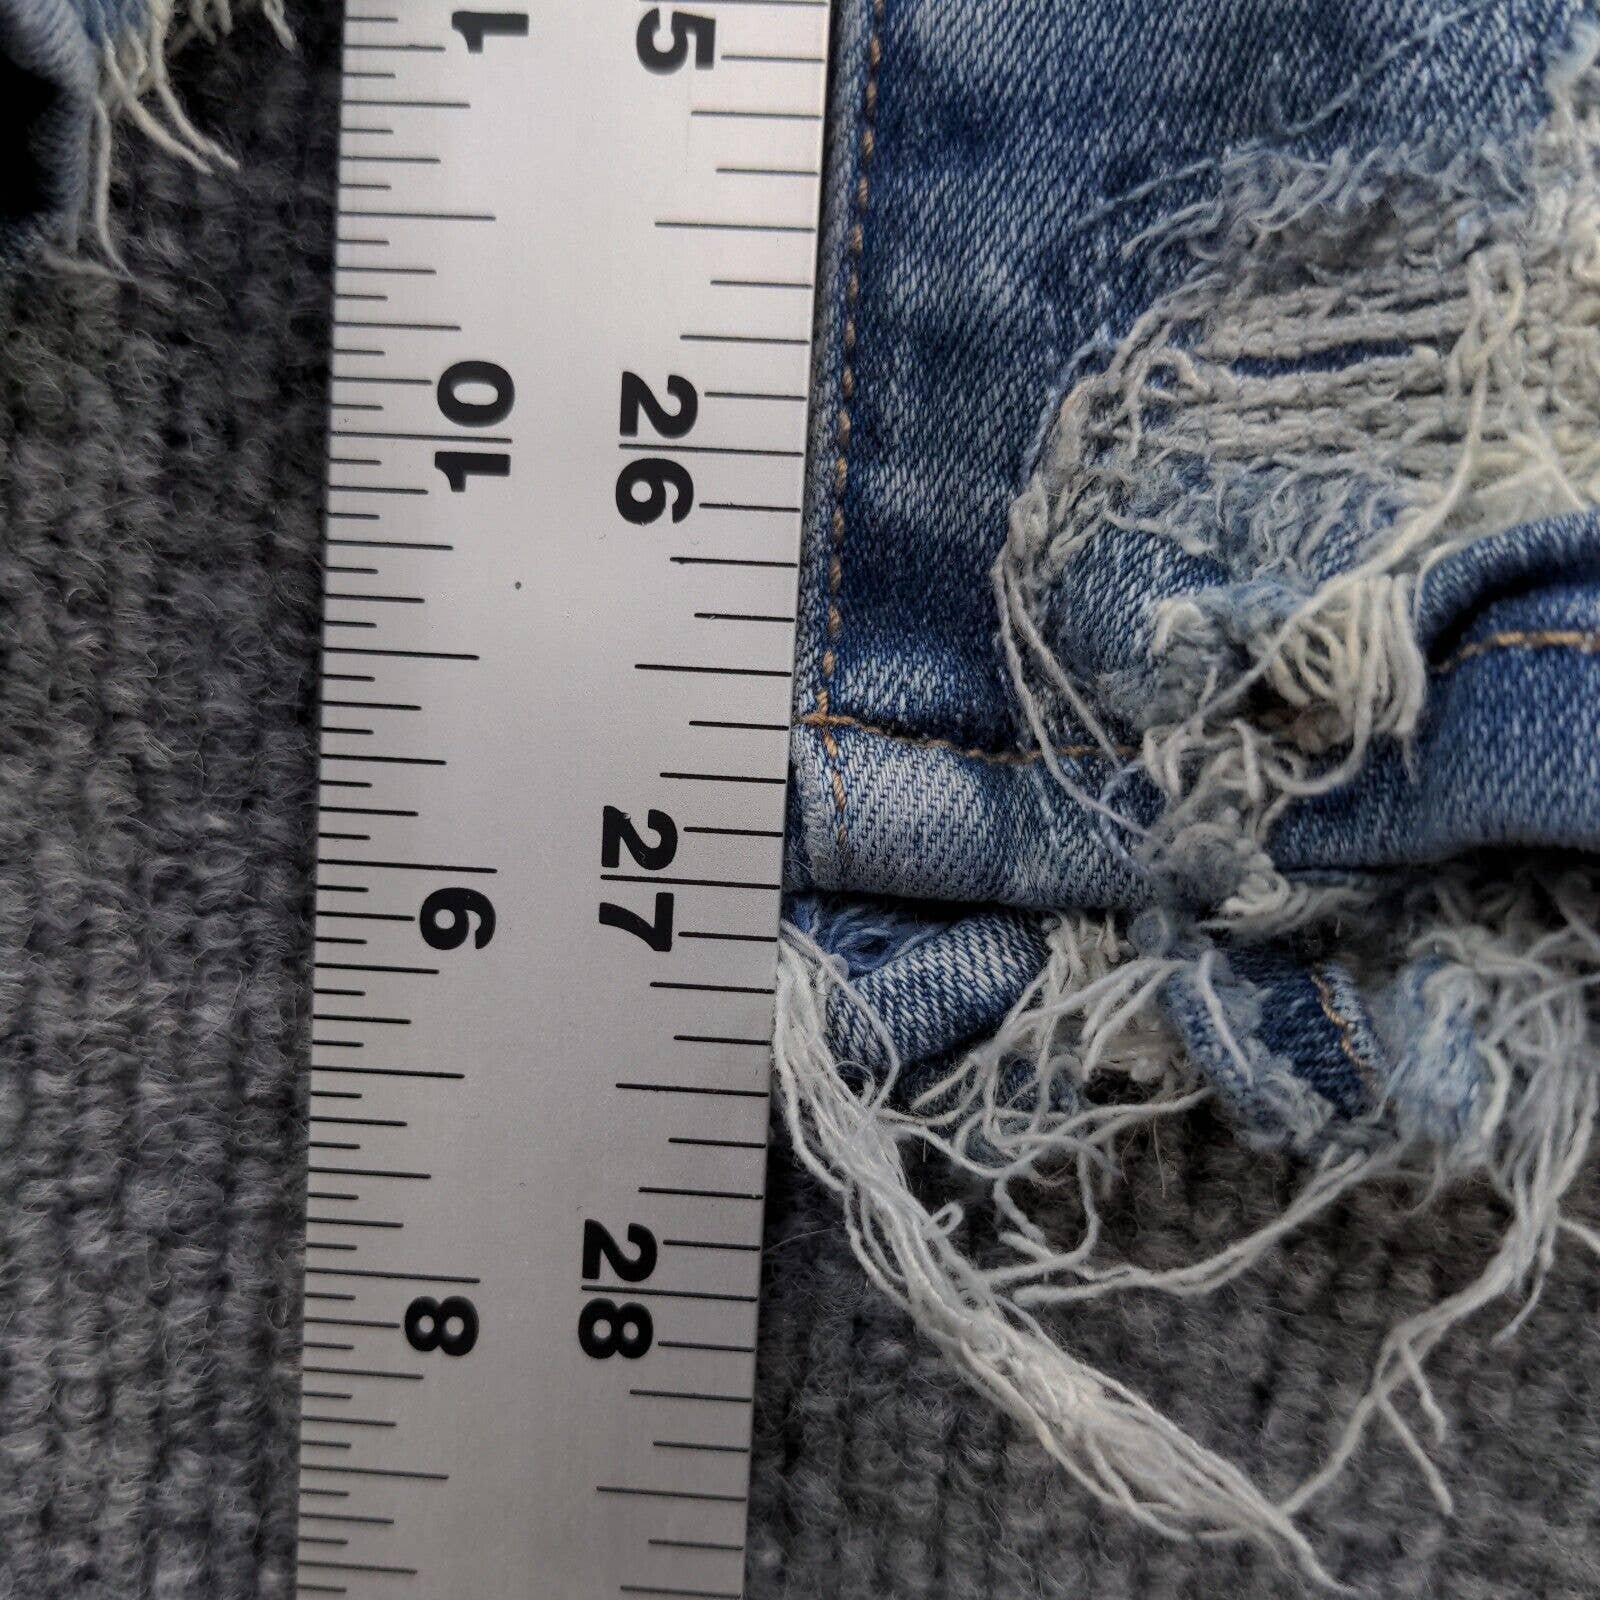 Amazing American Eagle Women´s Hi Rise Jegging Jeans Blue 10 Short 5-Pocket Distressed ozSXN2Dej just buy it